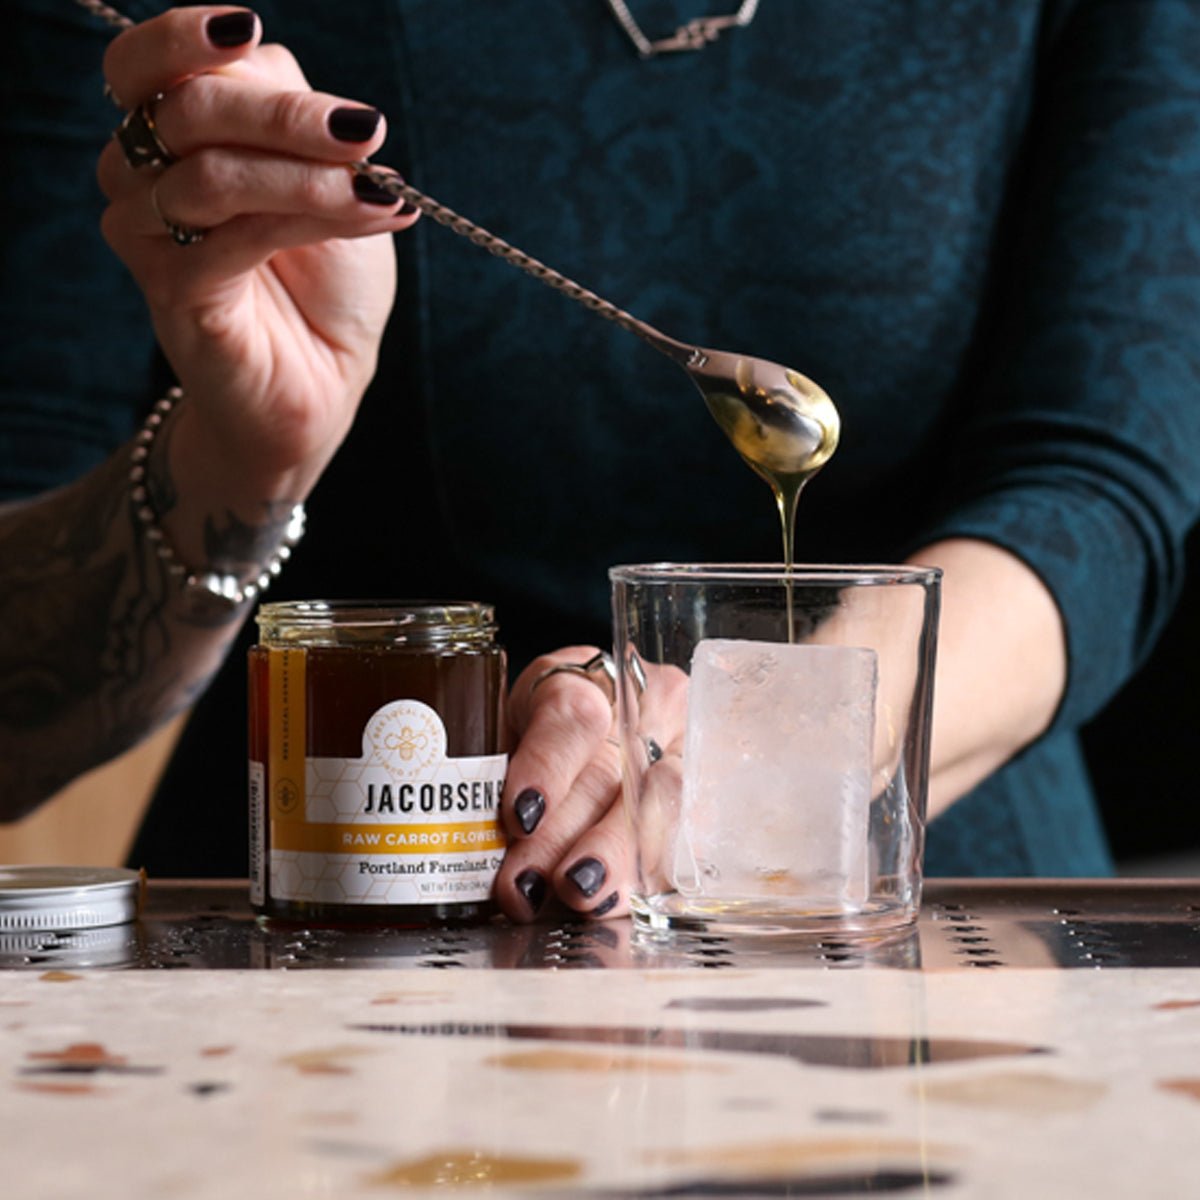 True Northwest Old Fashioned Cocktail Kit – Westward Whiskey